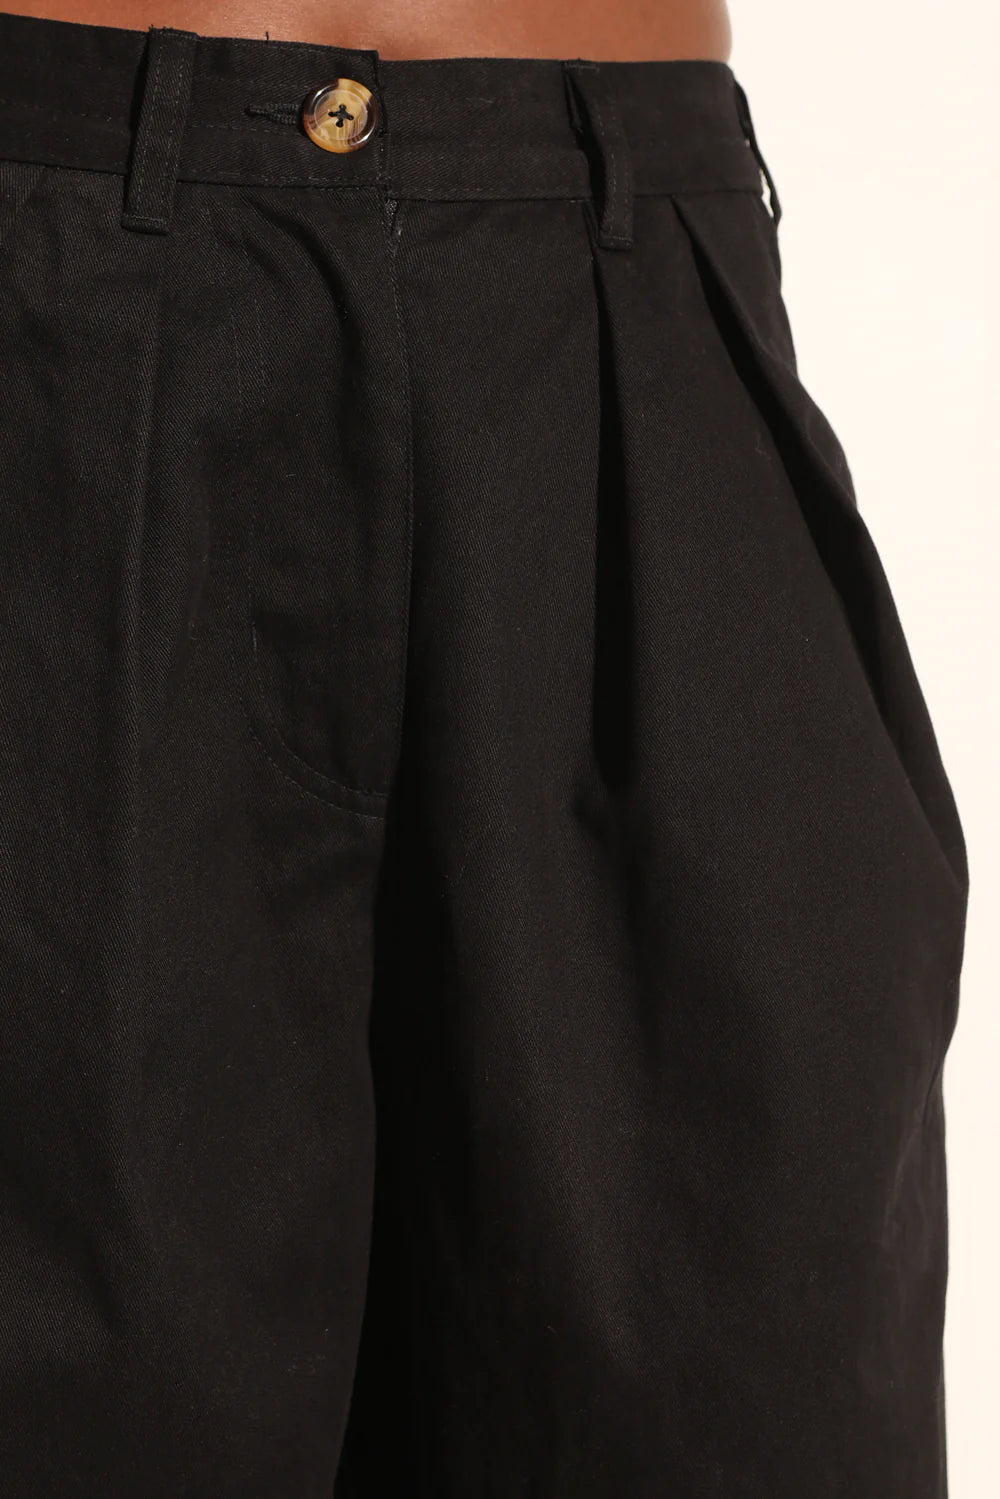 L.F. Markey Jenkin Trouser // Black